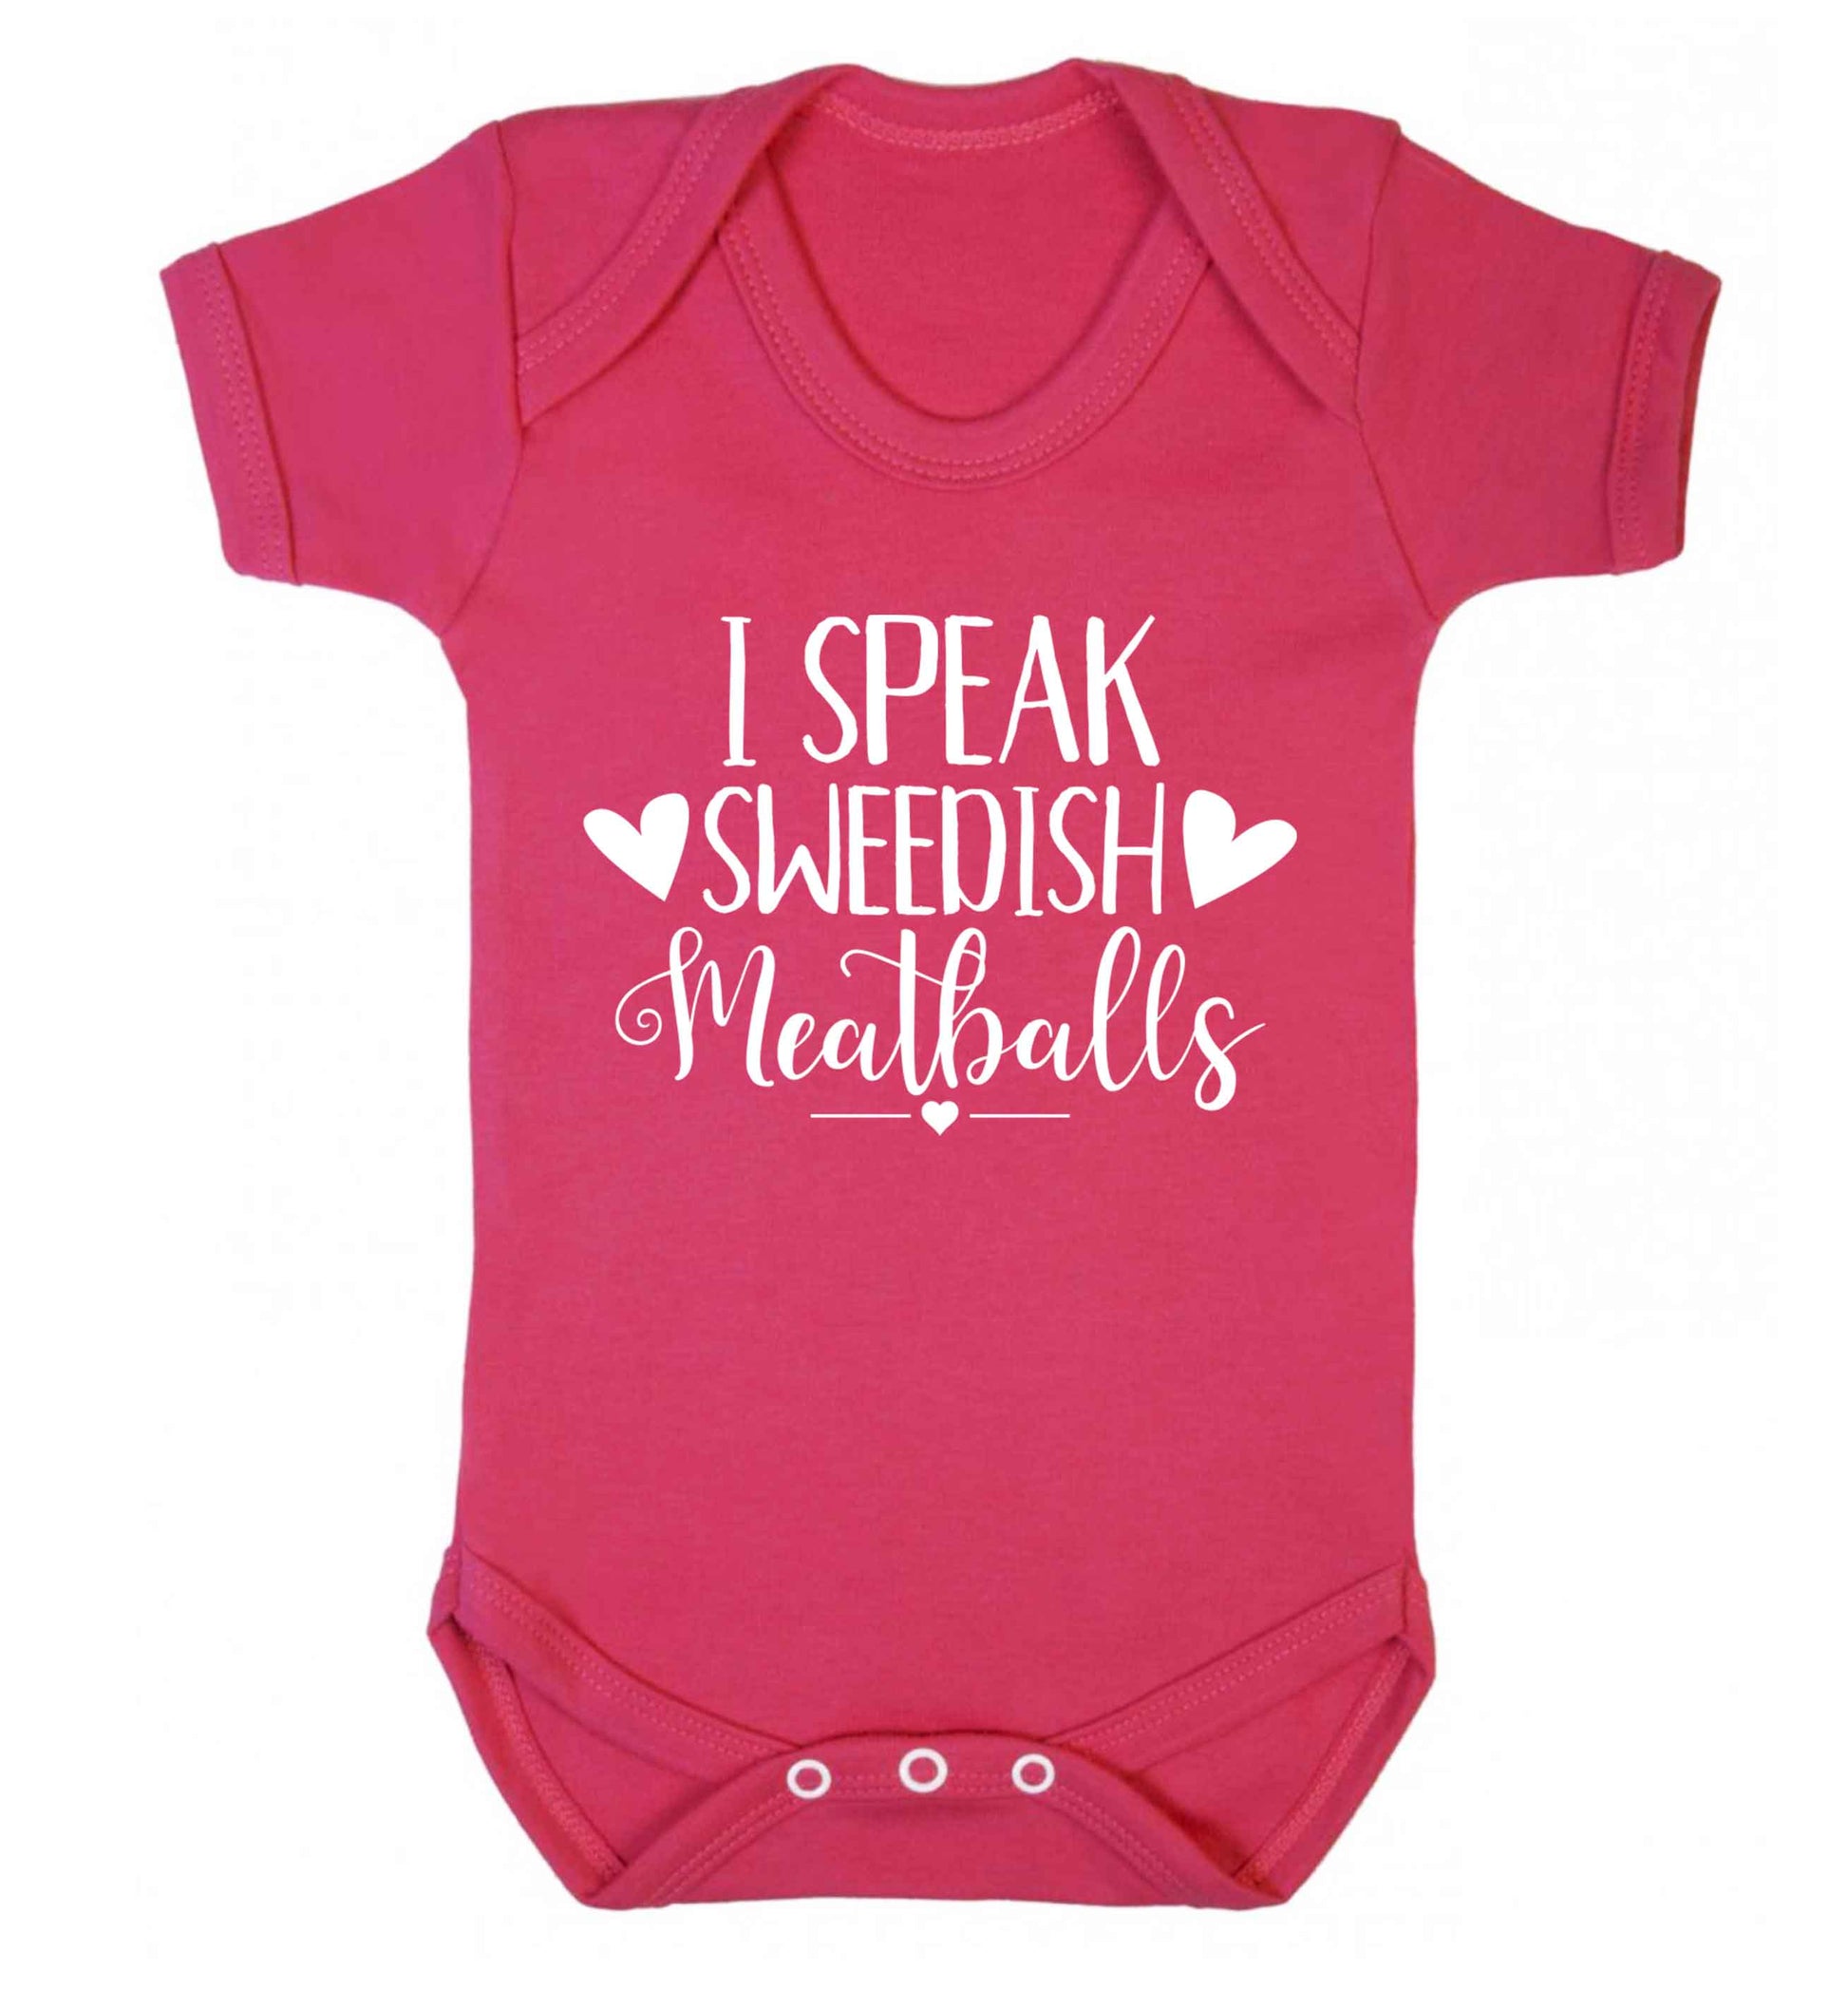 I speak sweedish...meatballs Baby Vest dark pink 18-24 months